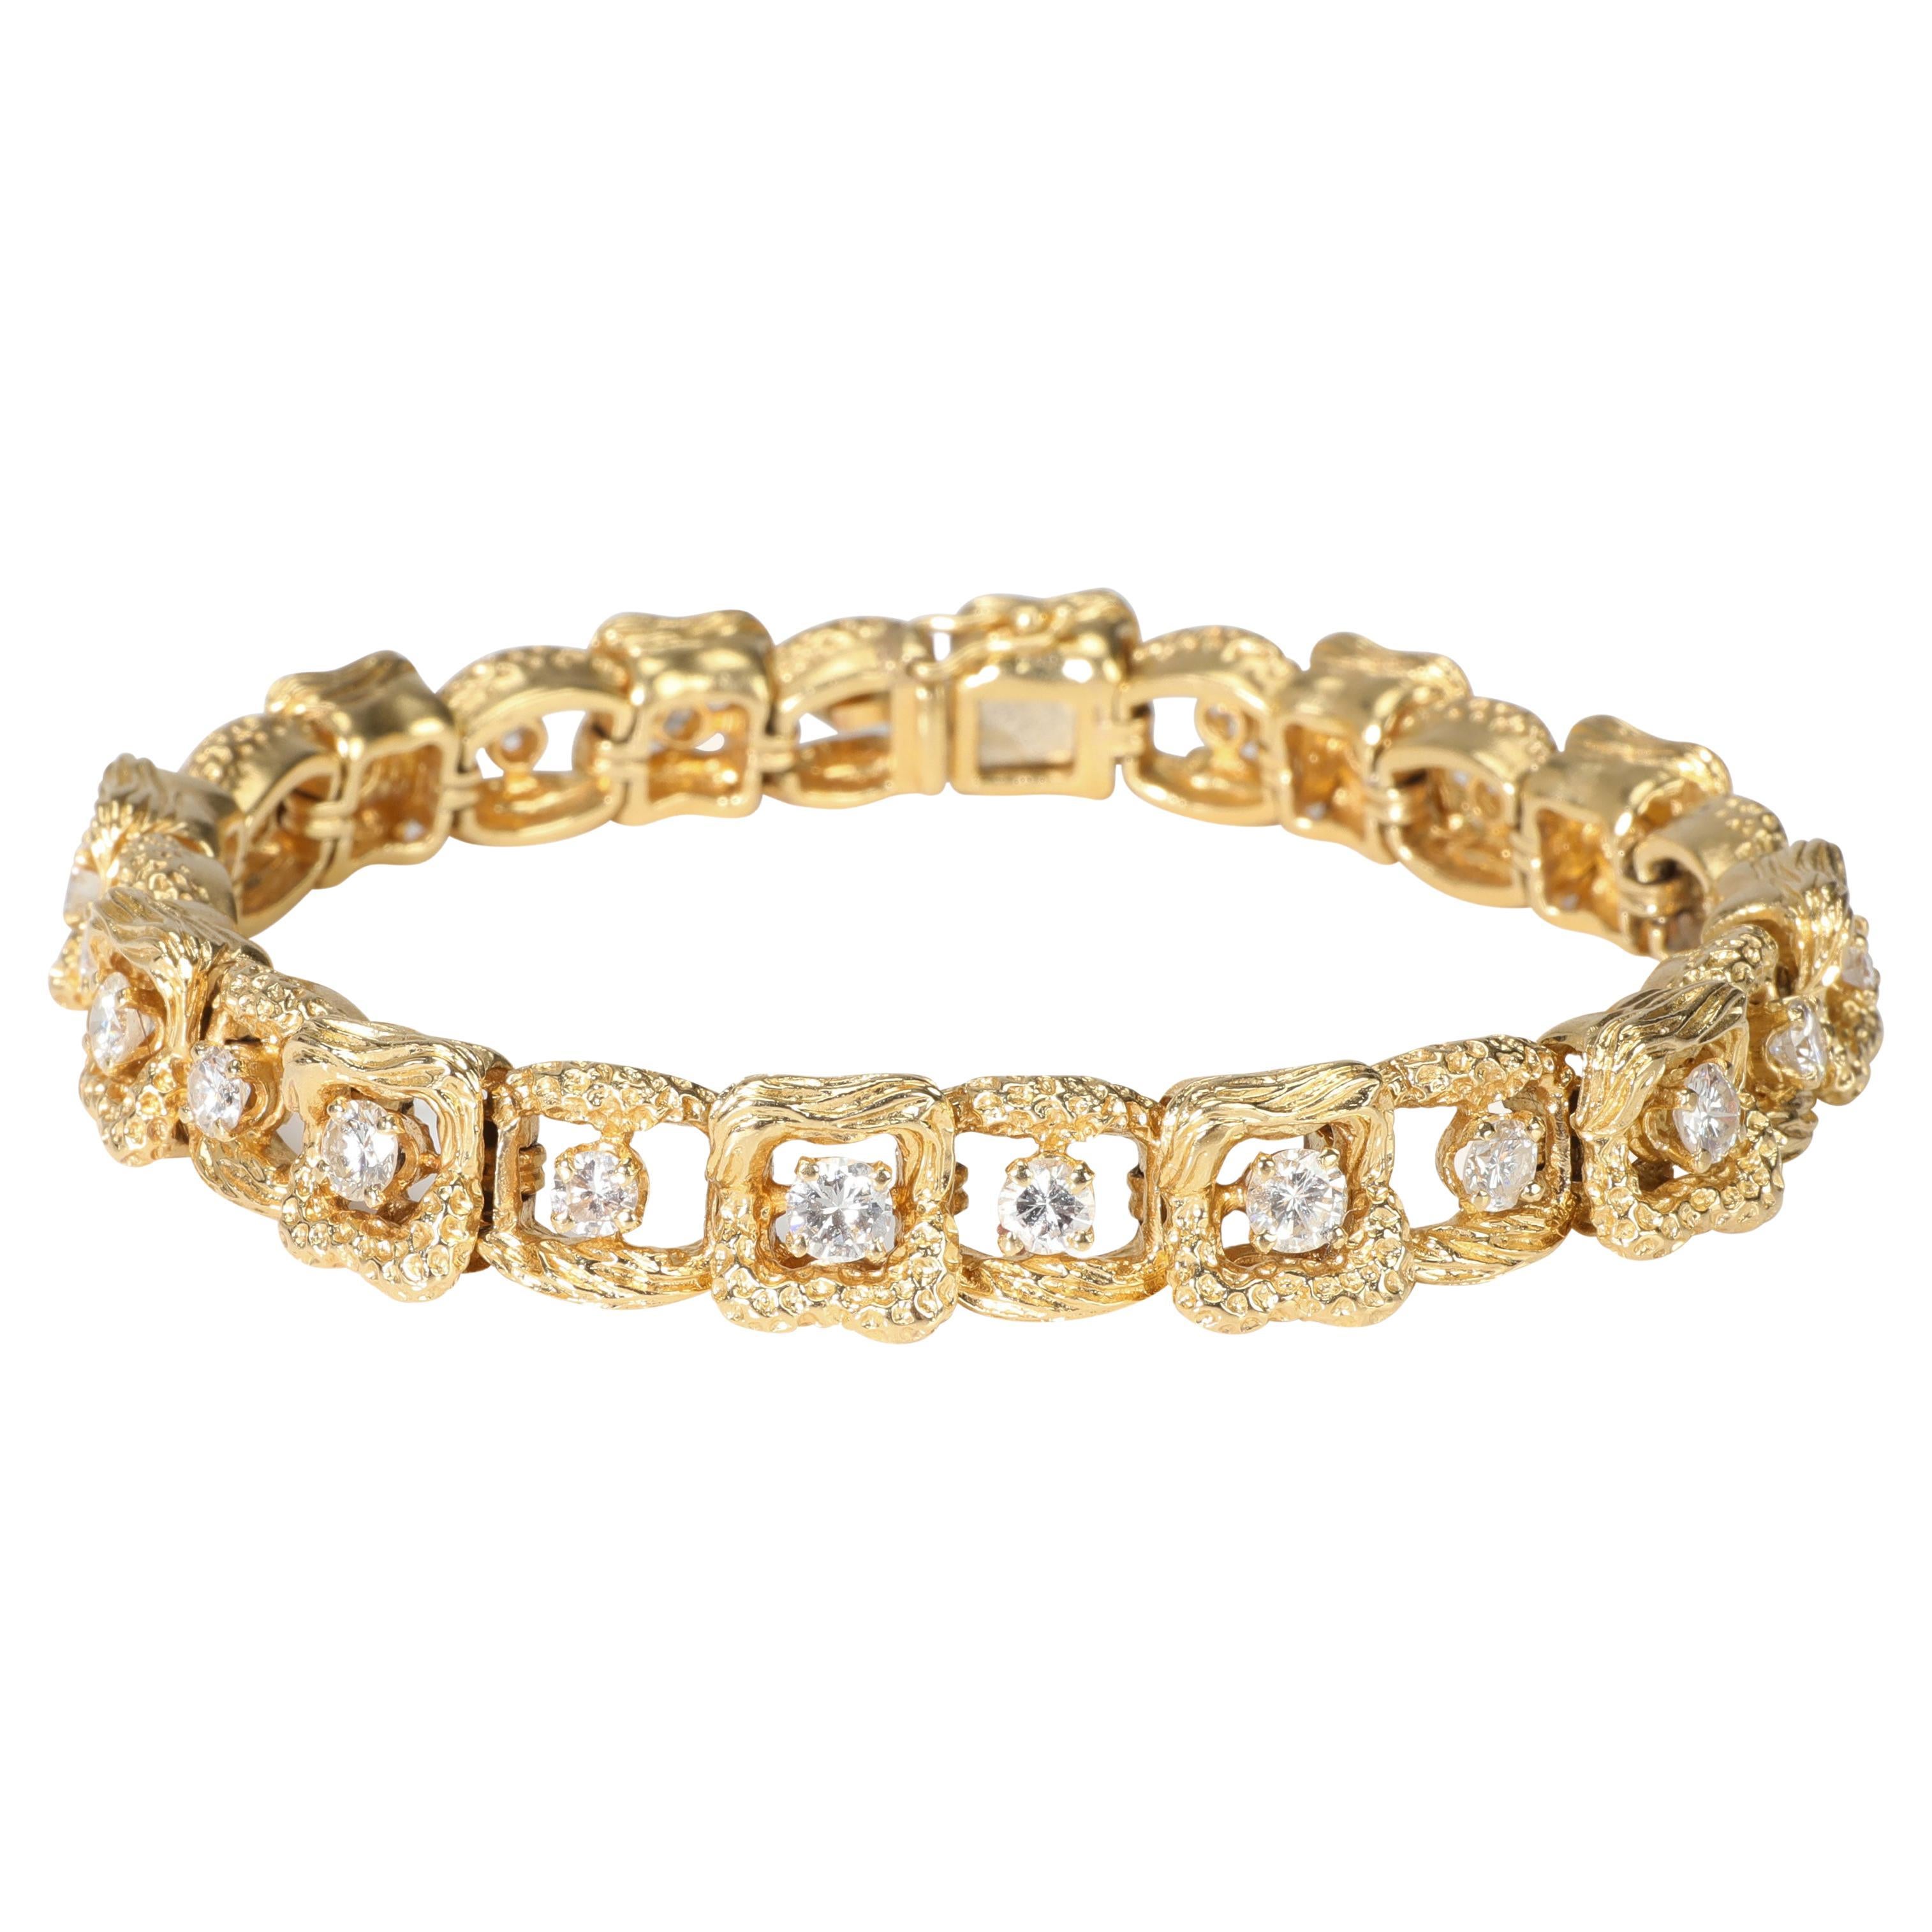 Tiffany & Co. Diamond Bracelet in 18kt Yellow Gold 4 CTW